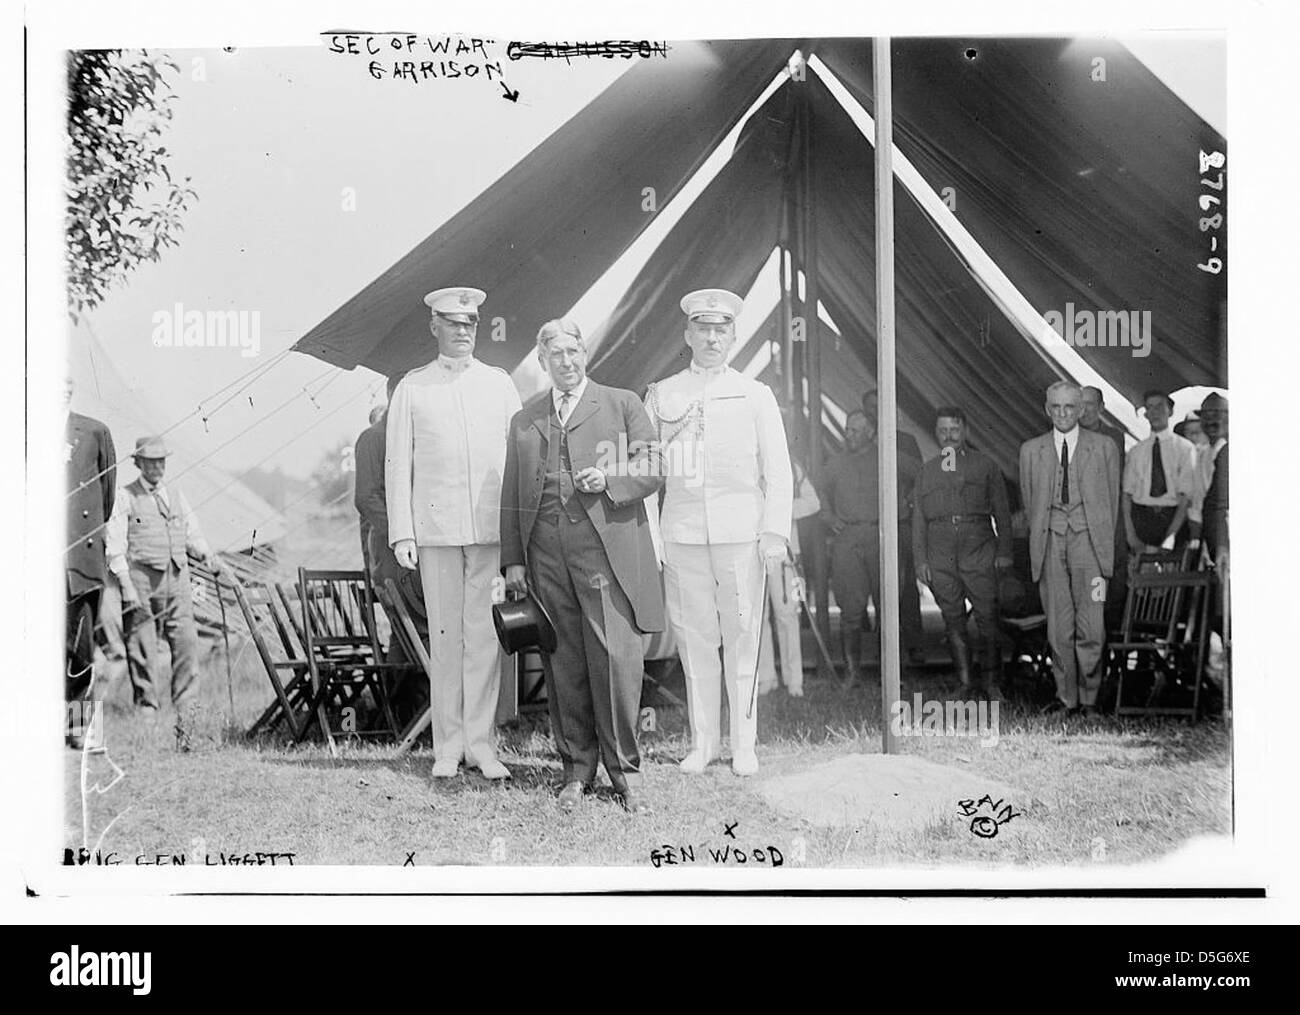 Brig Gen Liggett, Sec. of War - Garrison, Gen Wood (LOC) Stock Photo